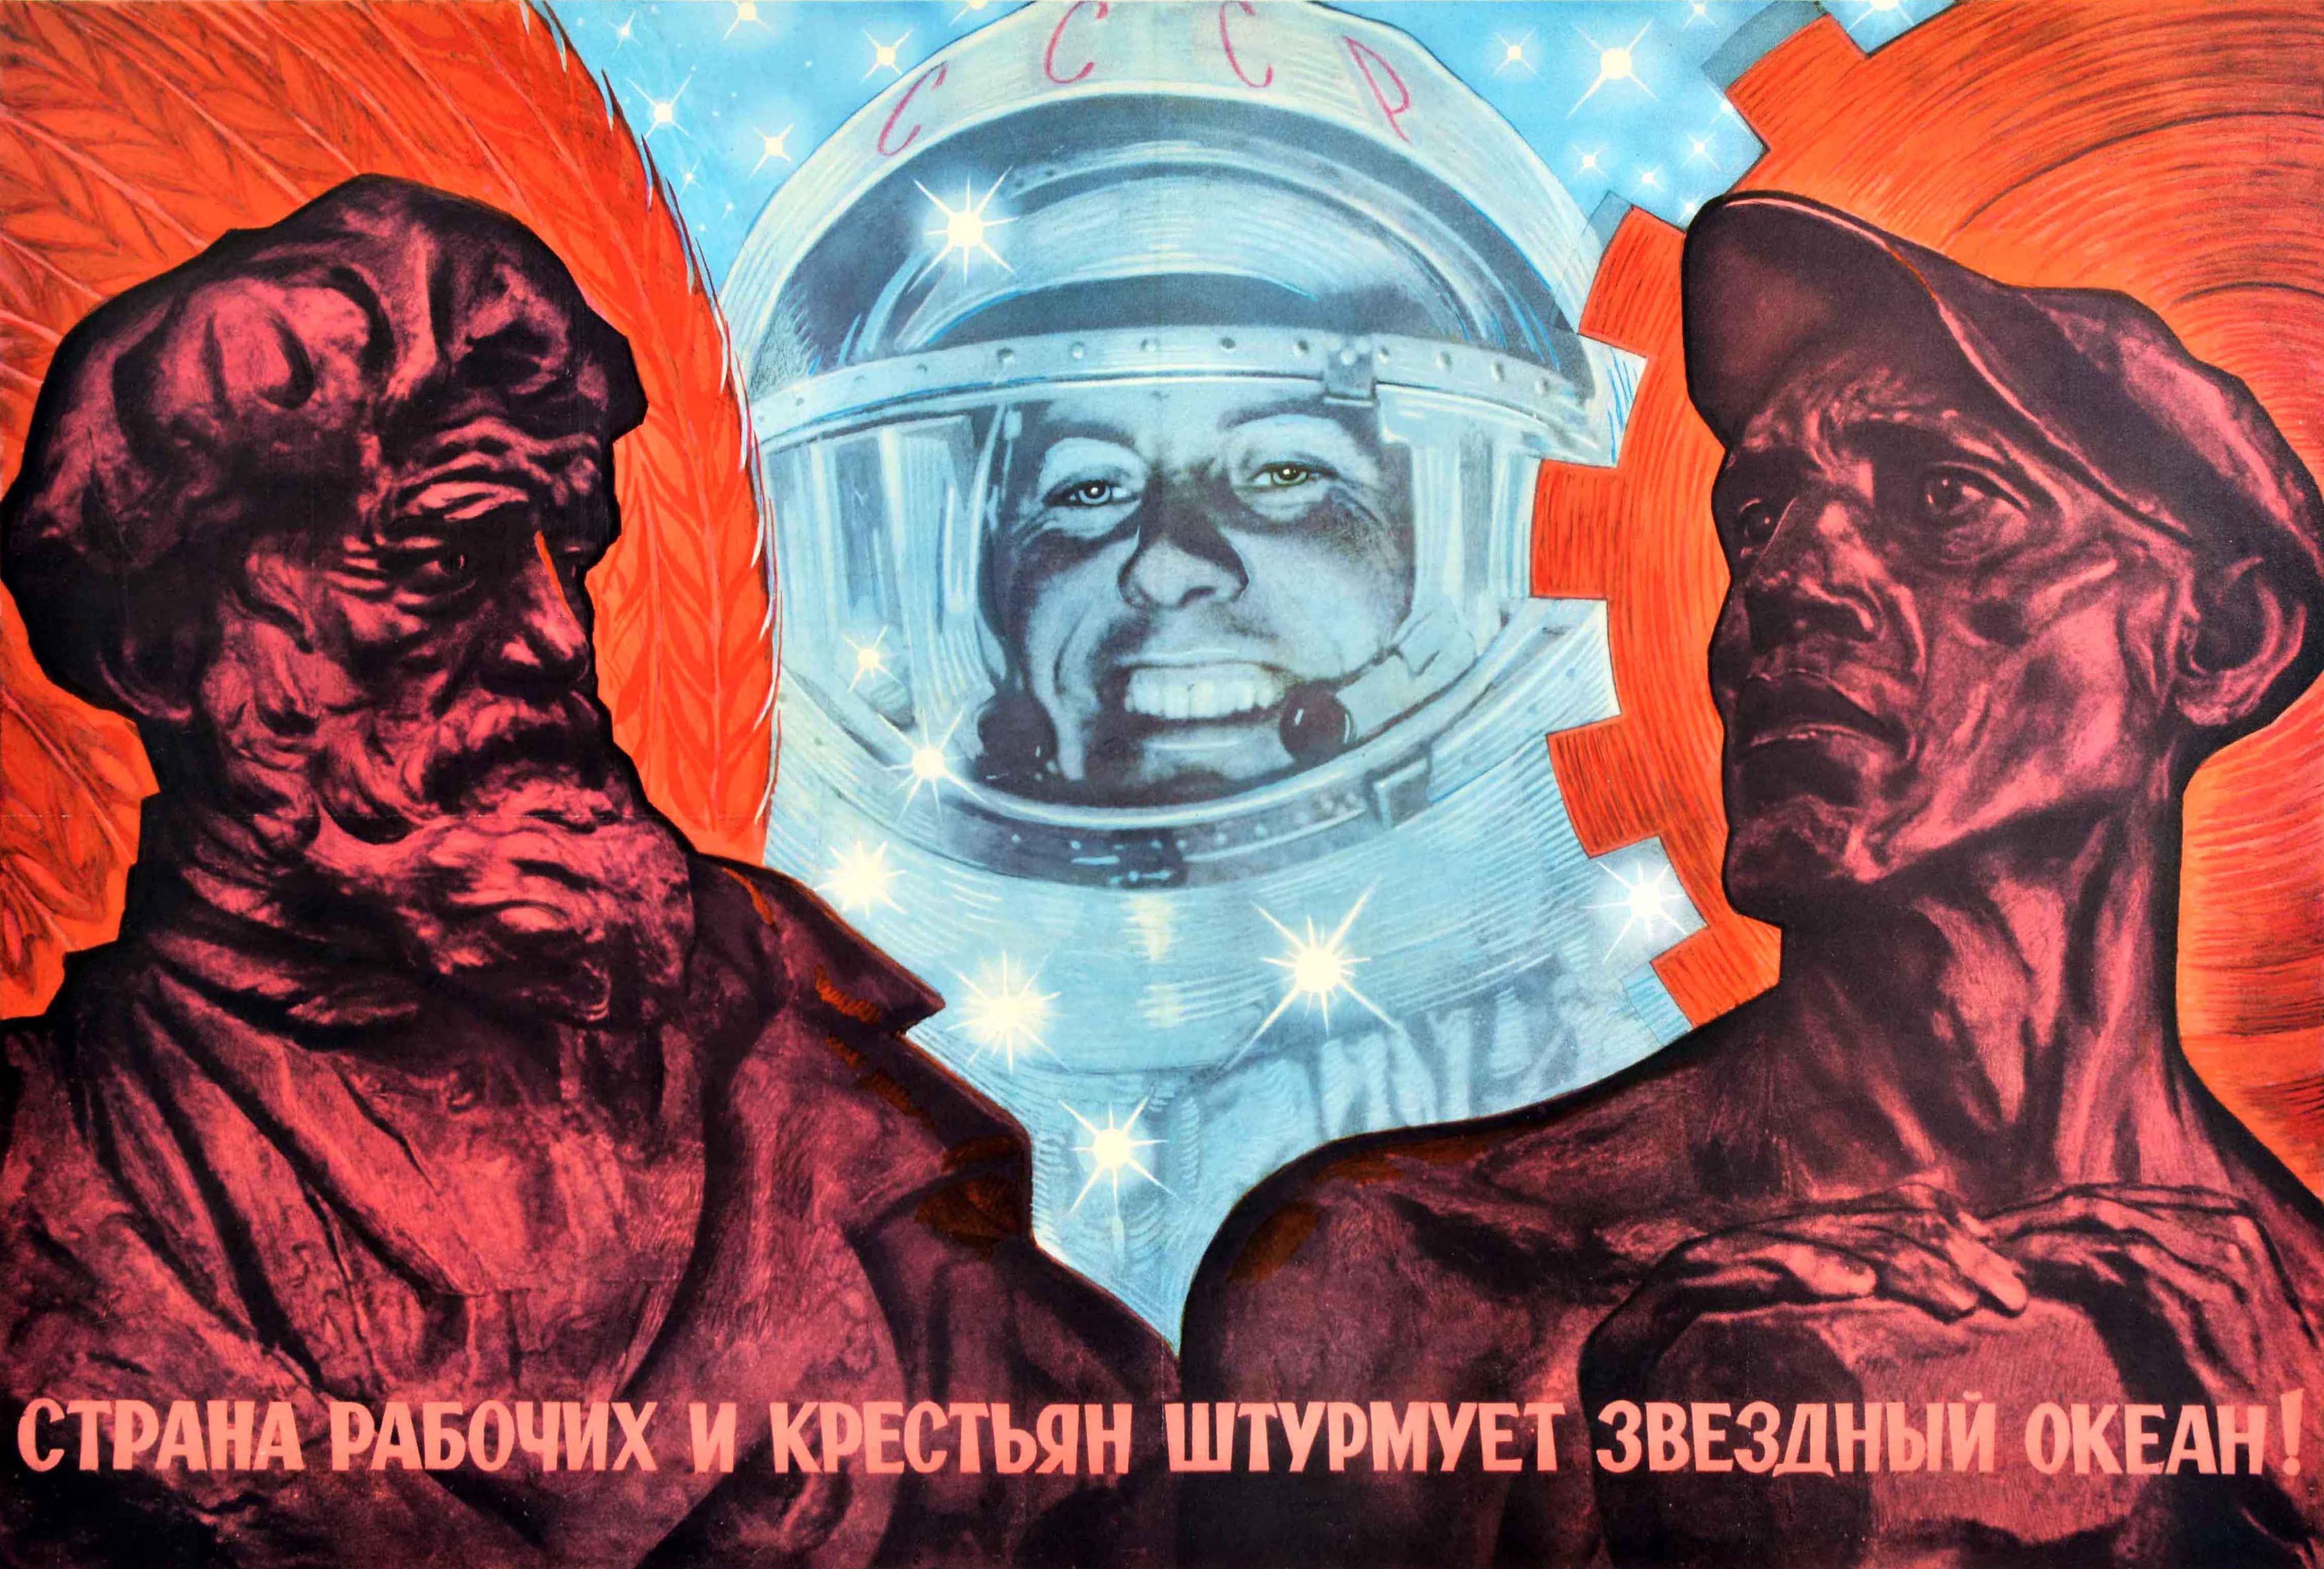 Affiche de propagande soviétique originale de Gagarin, Océan Atlantique tempérée, URSS - Print de Viktor Koretsky 